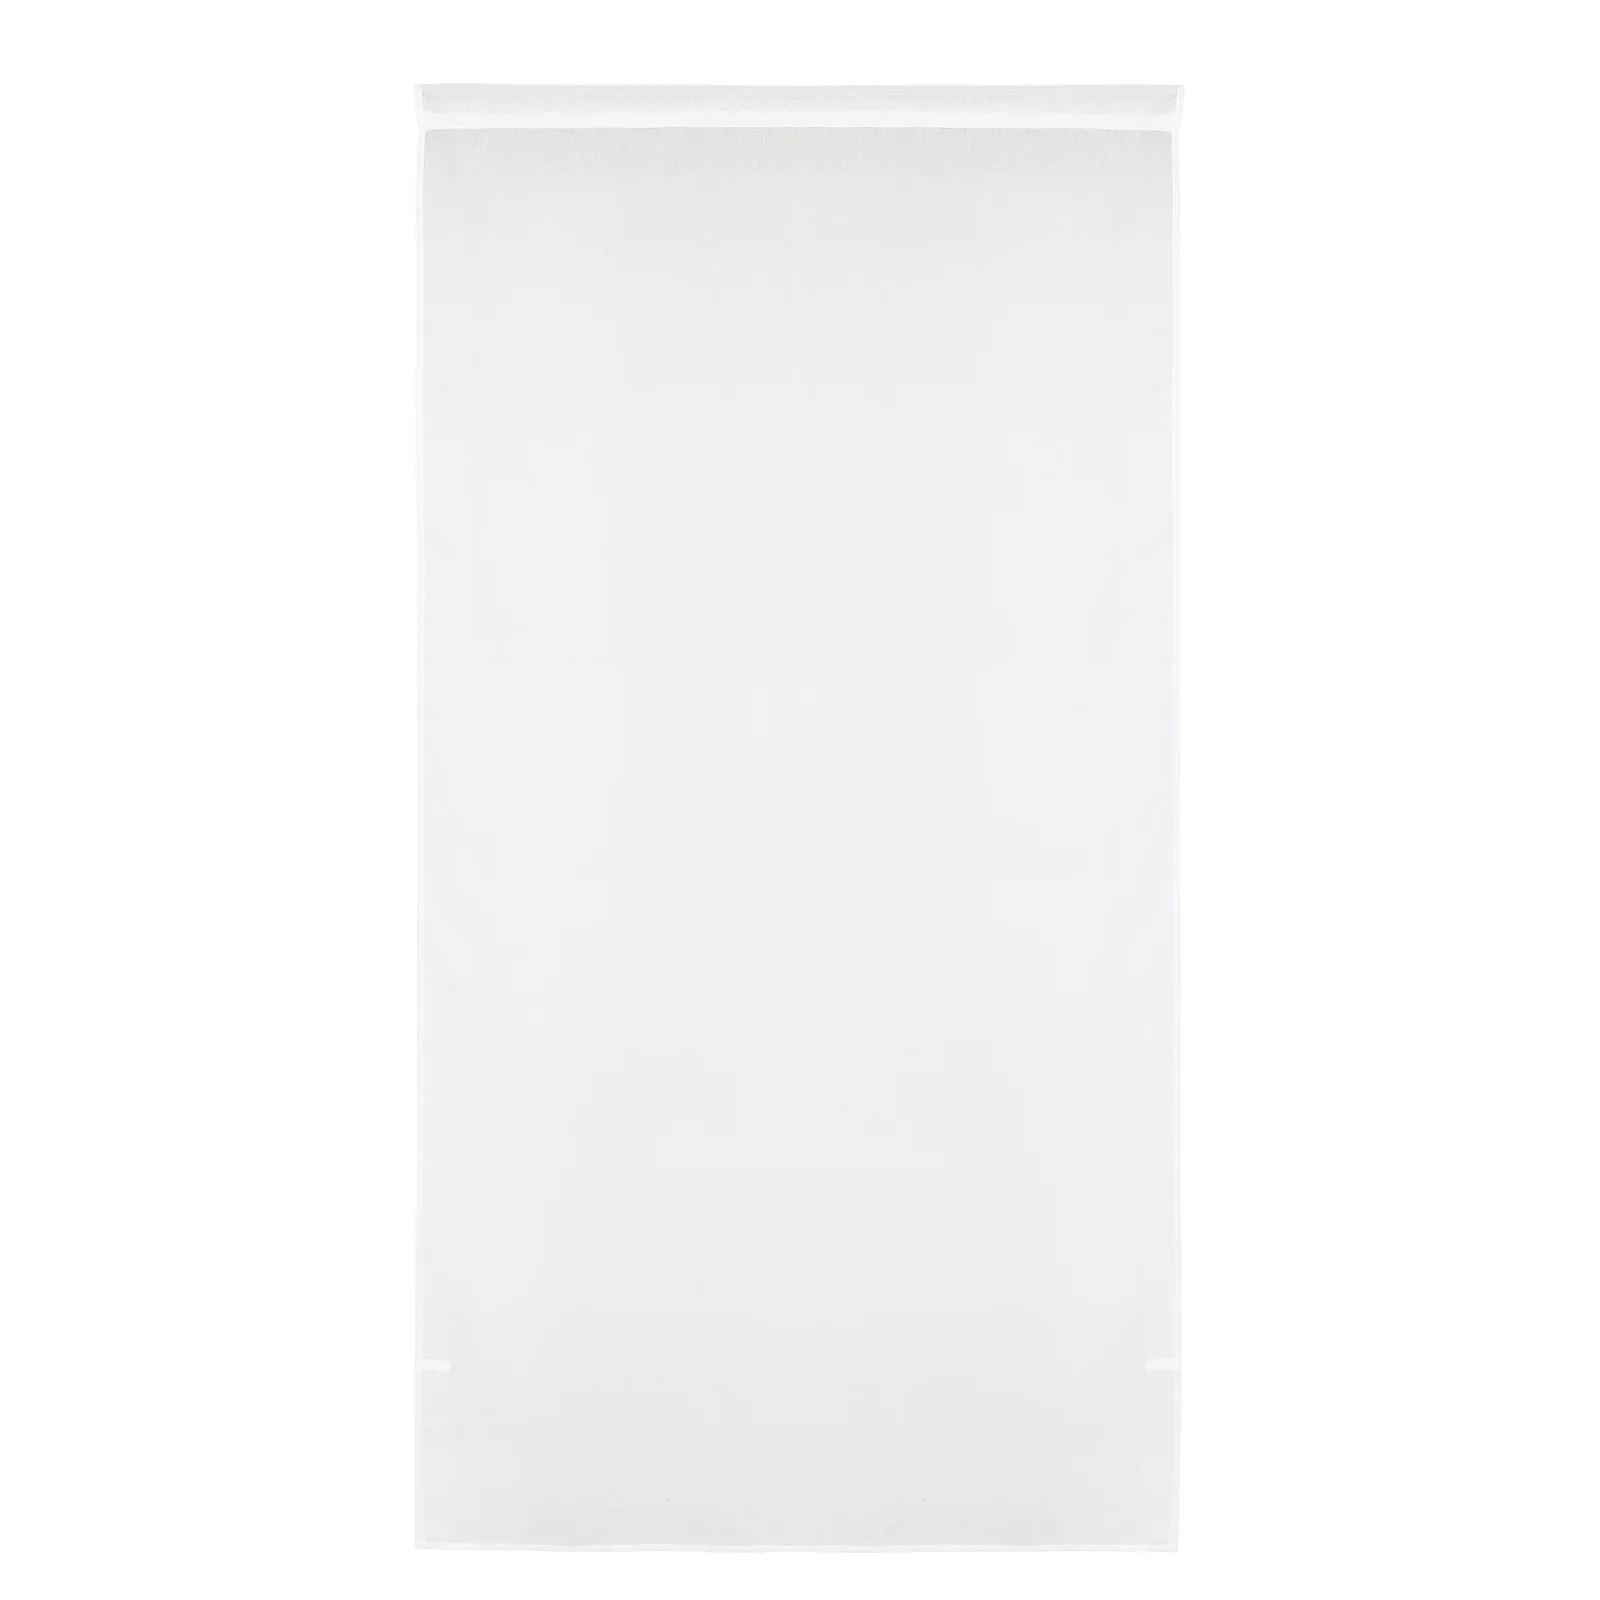 

100X200cm Linen Sheer Curtains Semi Sheer Curtain Panel Voile Window Tulle for Bedroom Living Room (White)